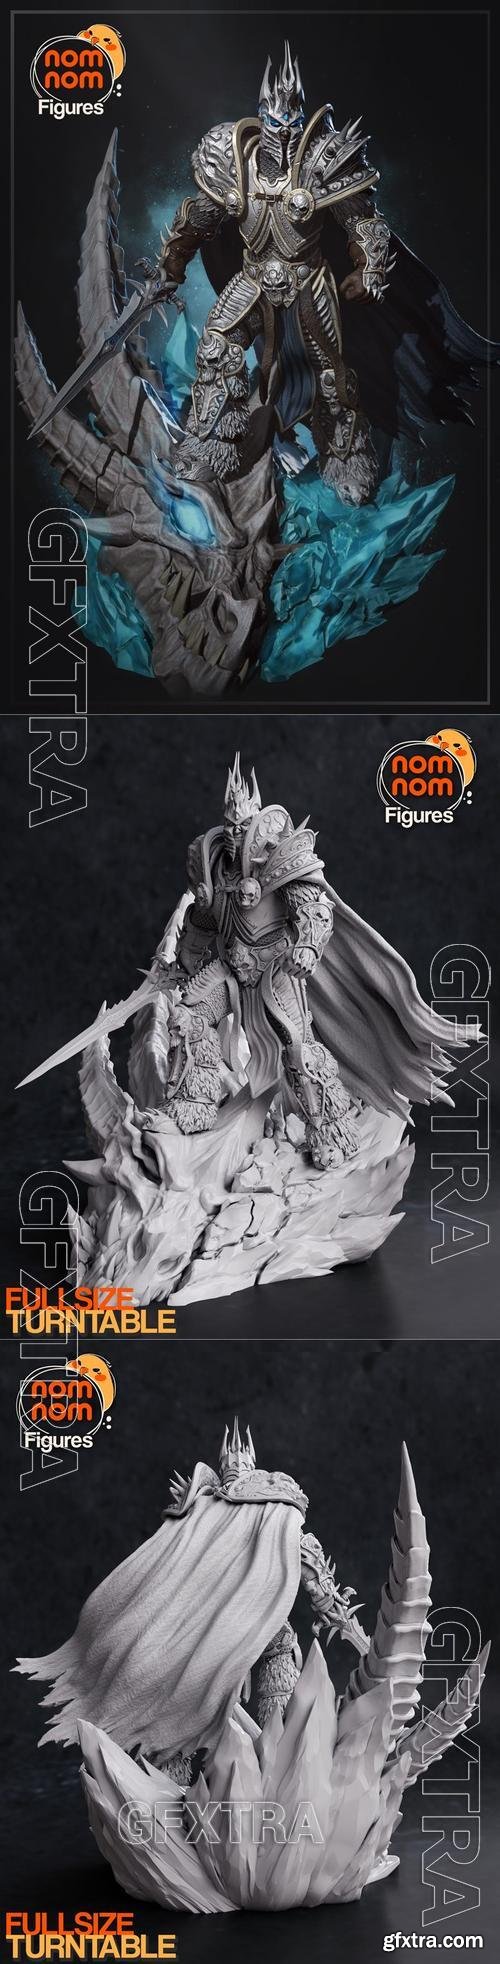 Nomnom Figures - Arthas from World of Warcraft &ndash; 3D Print Model